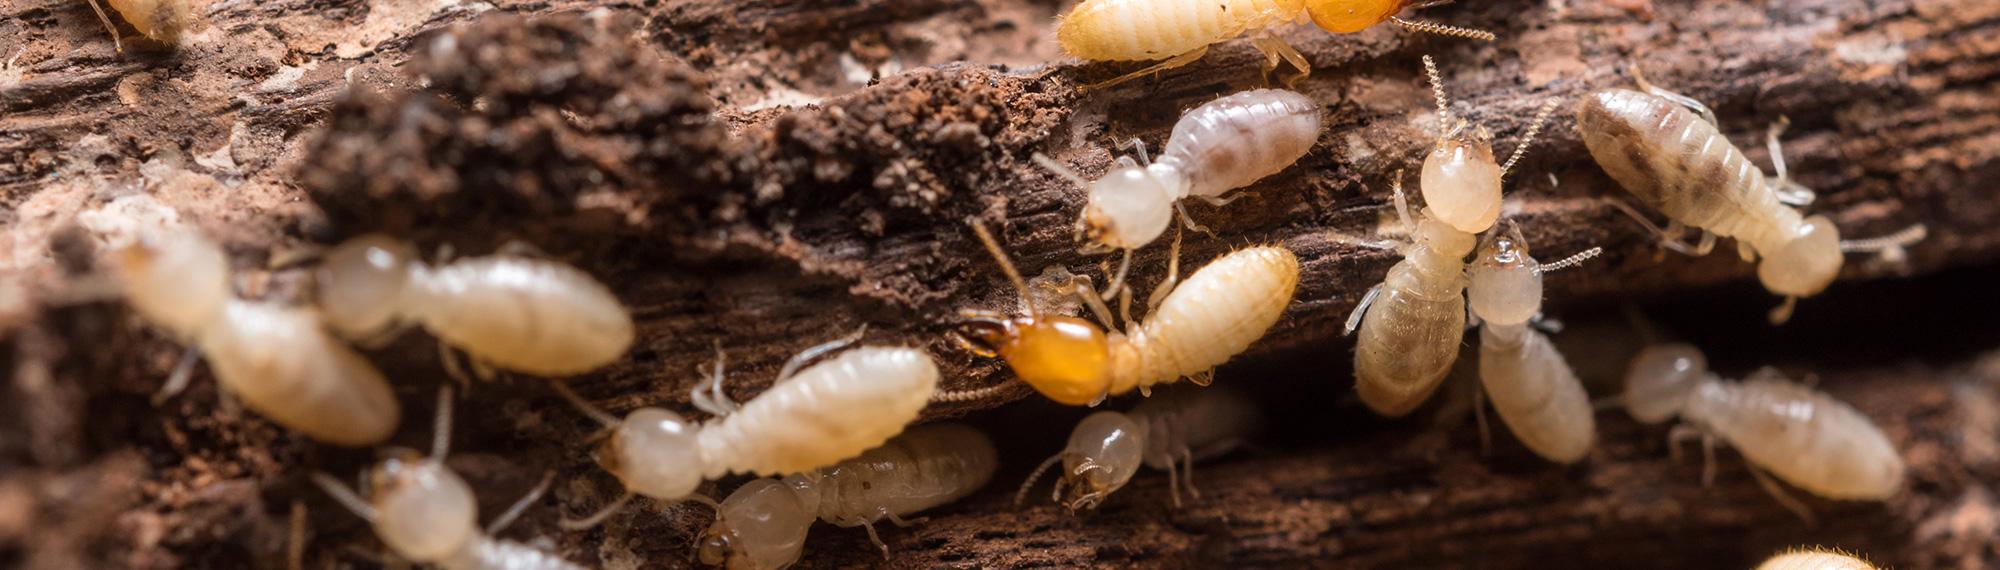 termites damaging wood